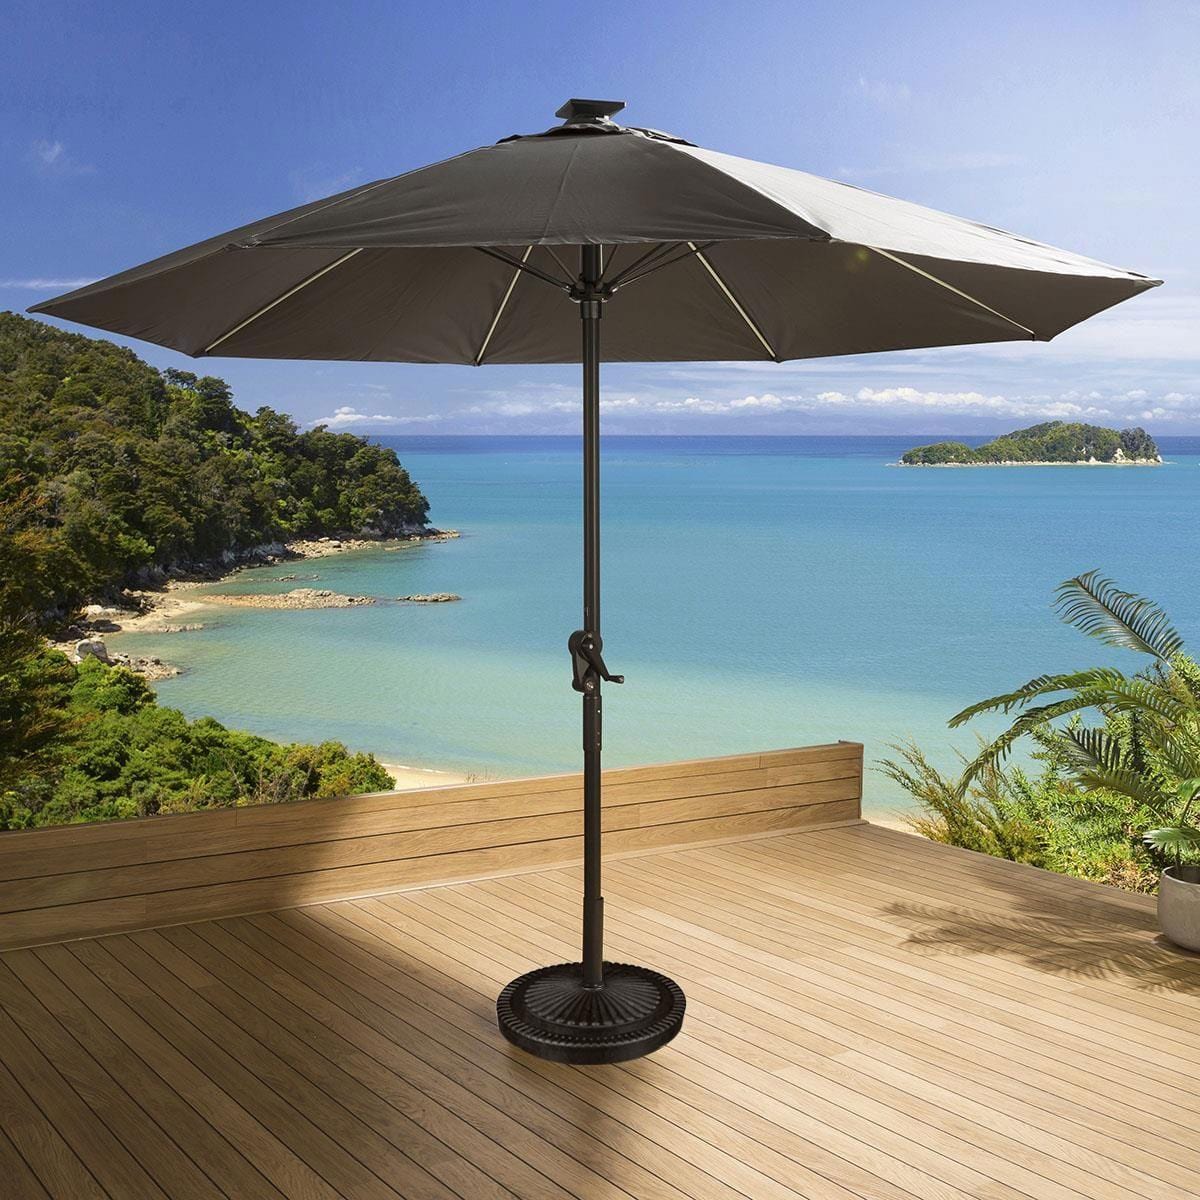 Quatropi Luxury Garden Grey Round 3M Parasol Umbrella (300cm) | Weighted Base Included